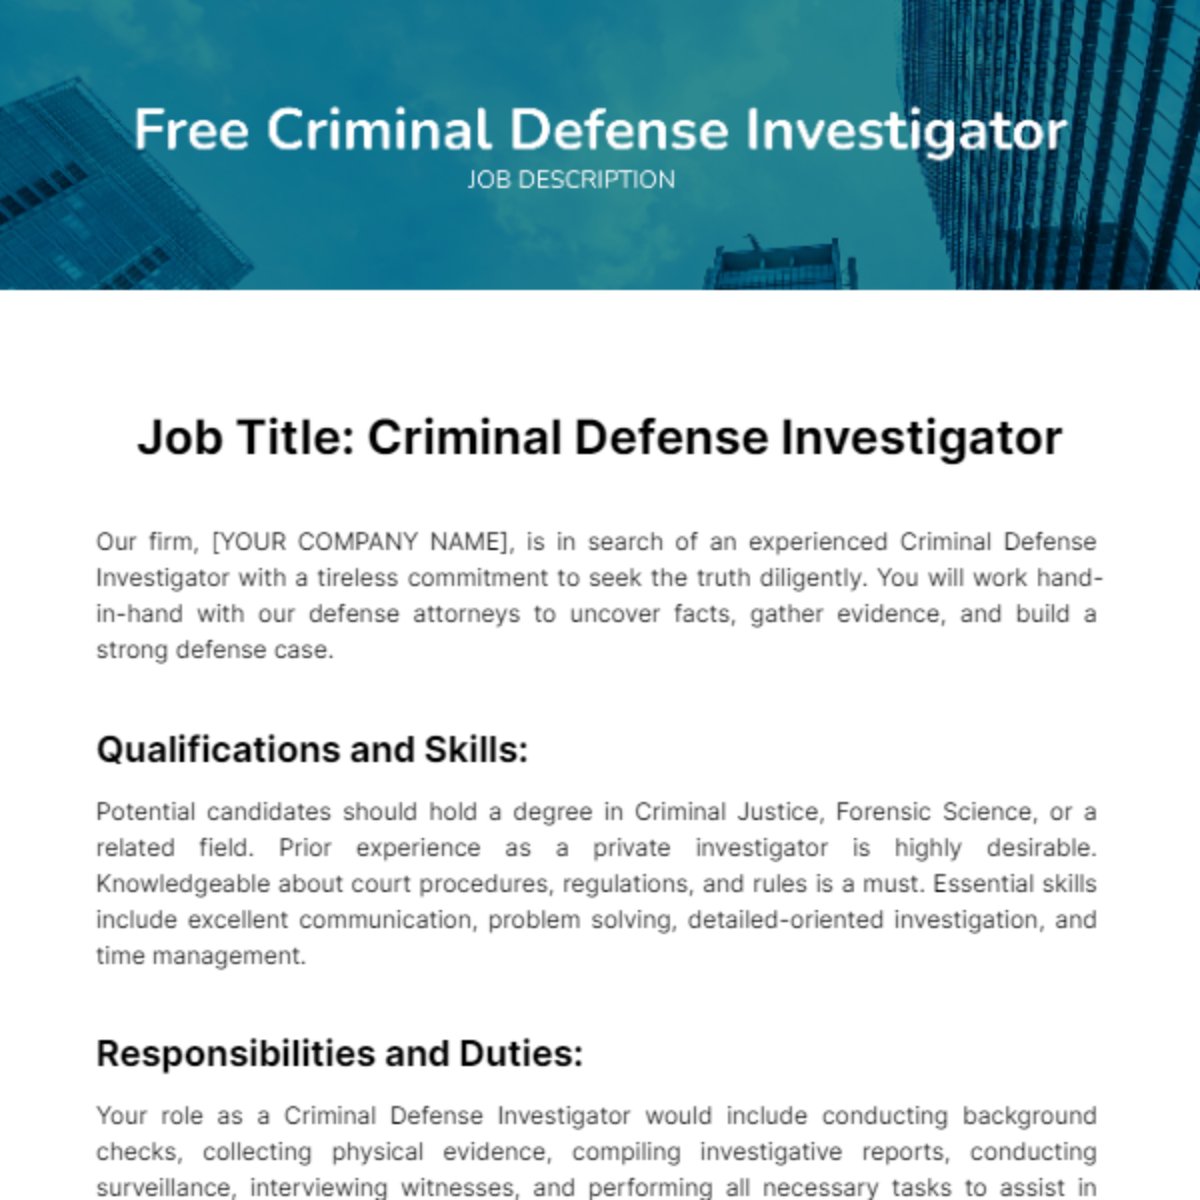 Criminal Defense Investigator Job Description Template